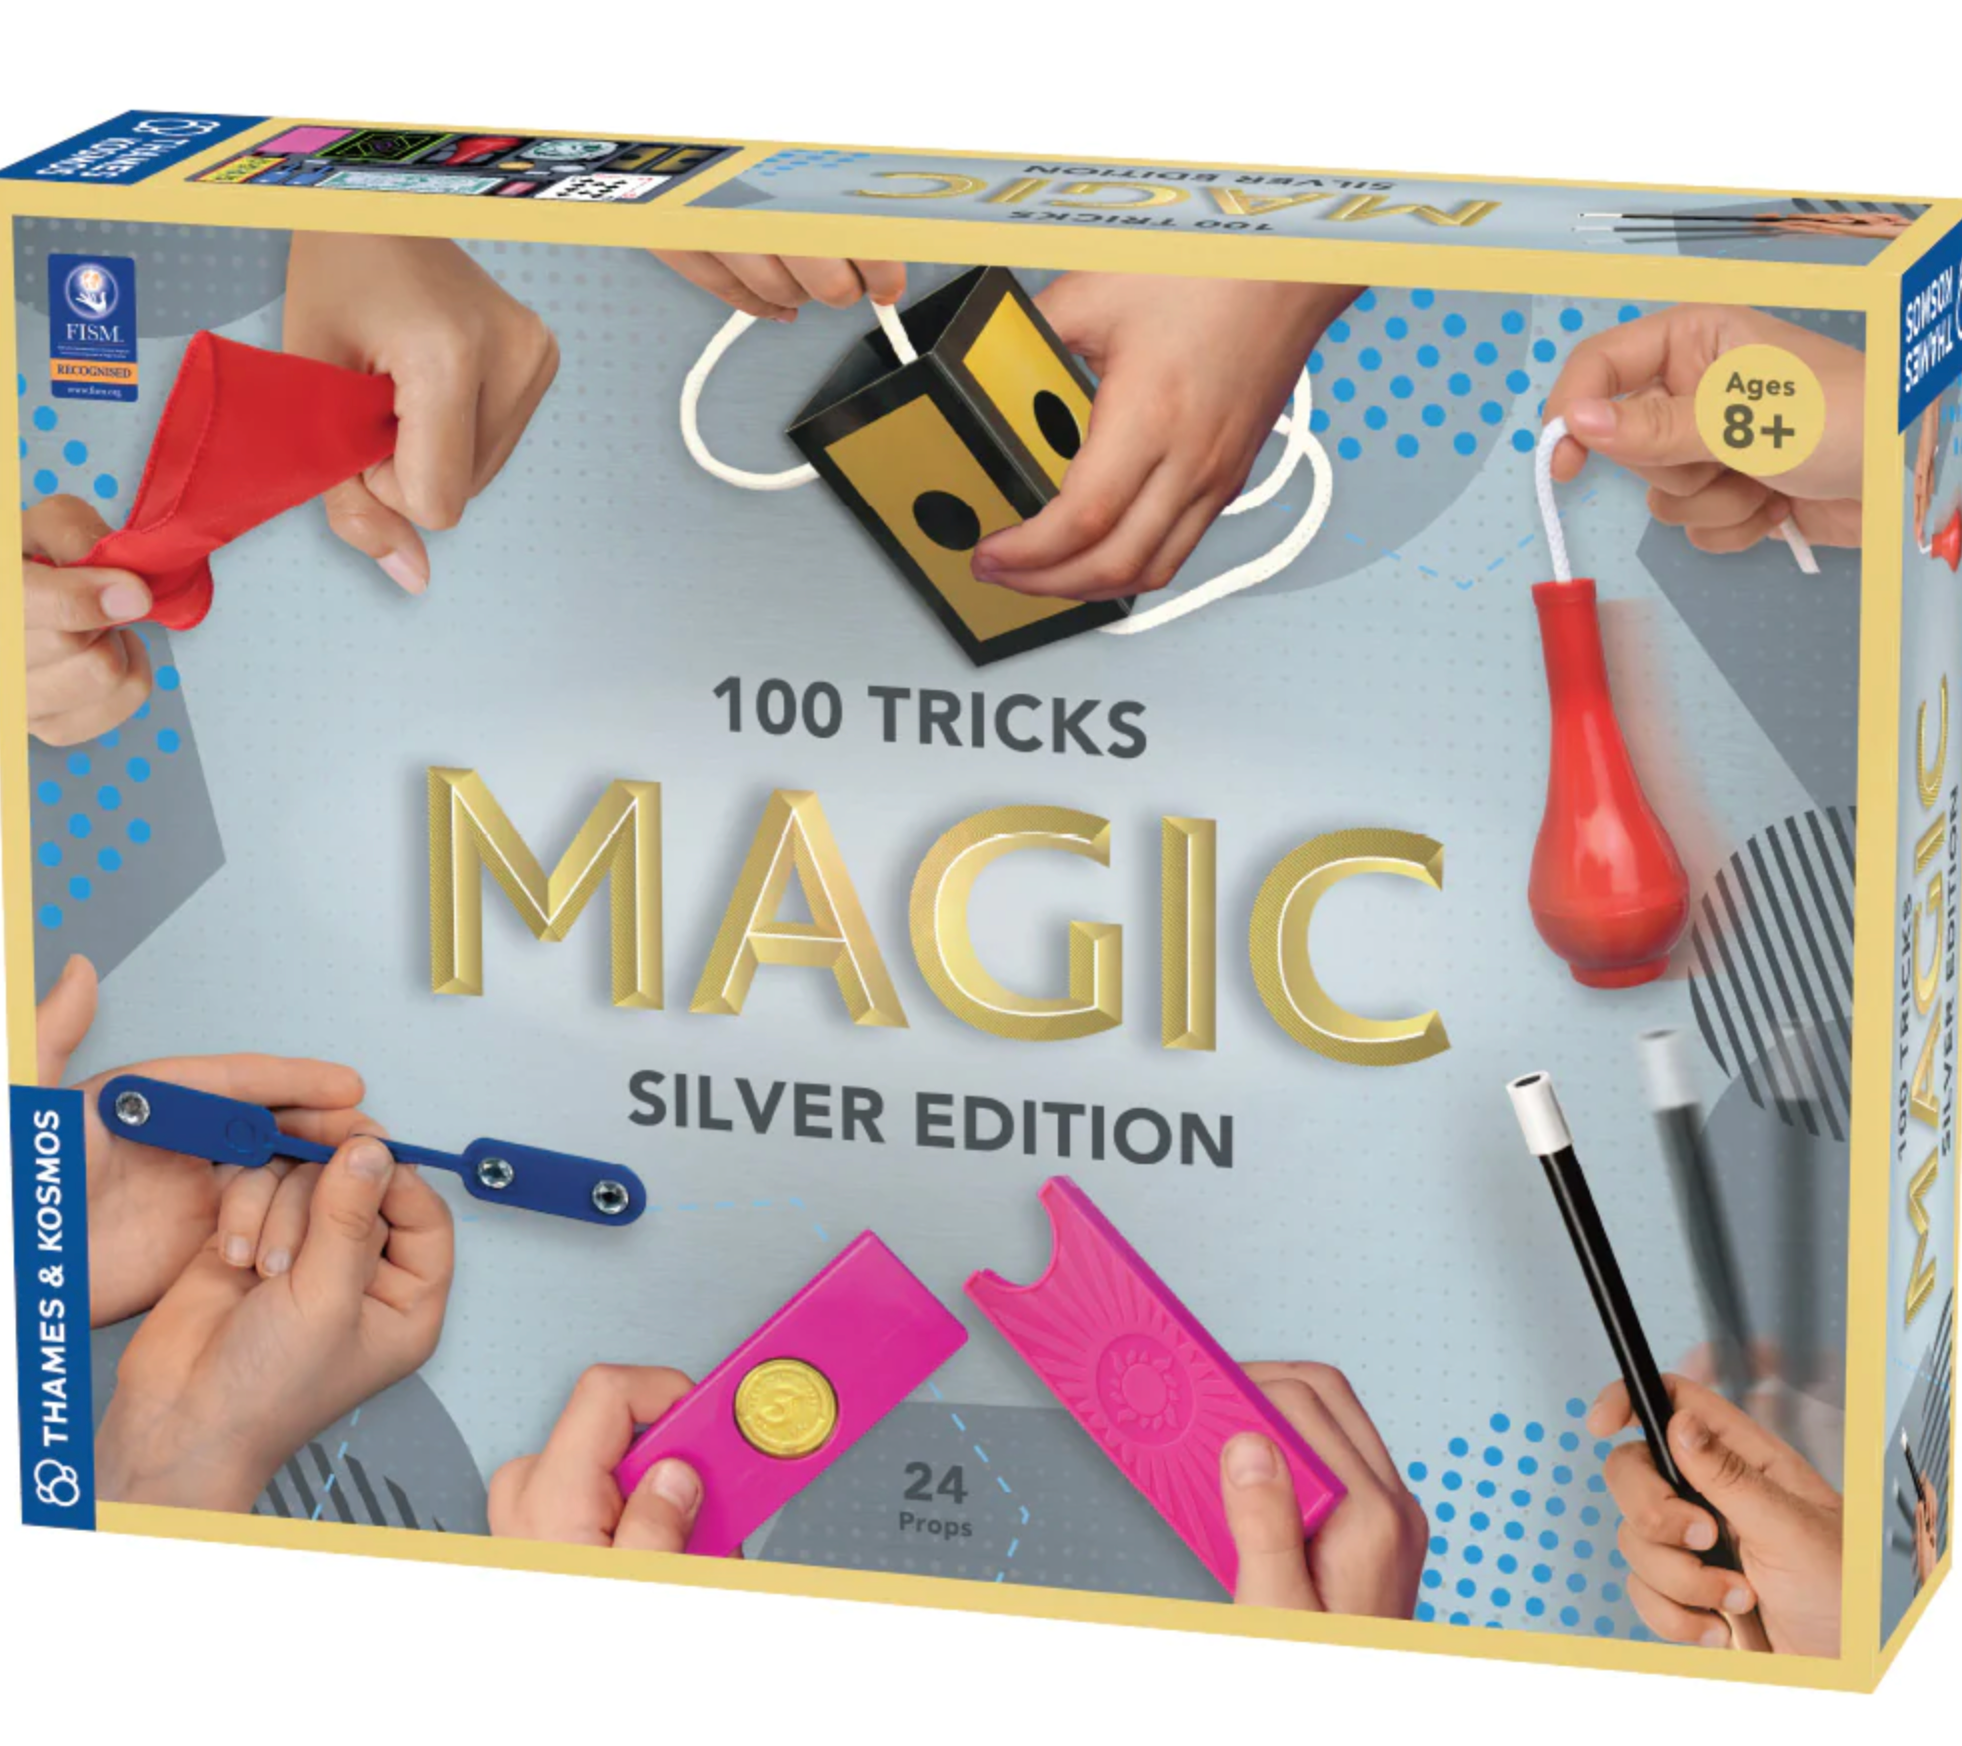 100 Magic Tricks Silver Edition